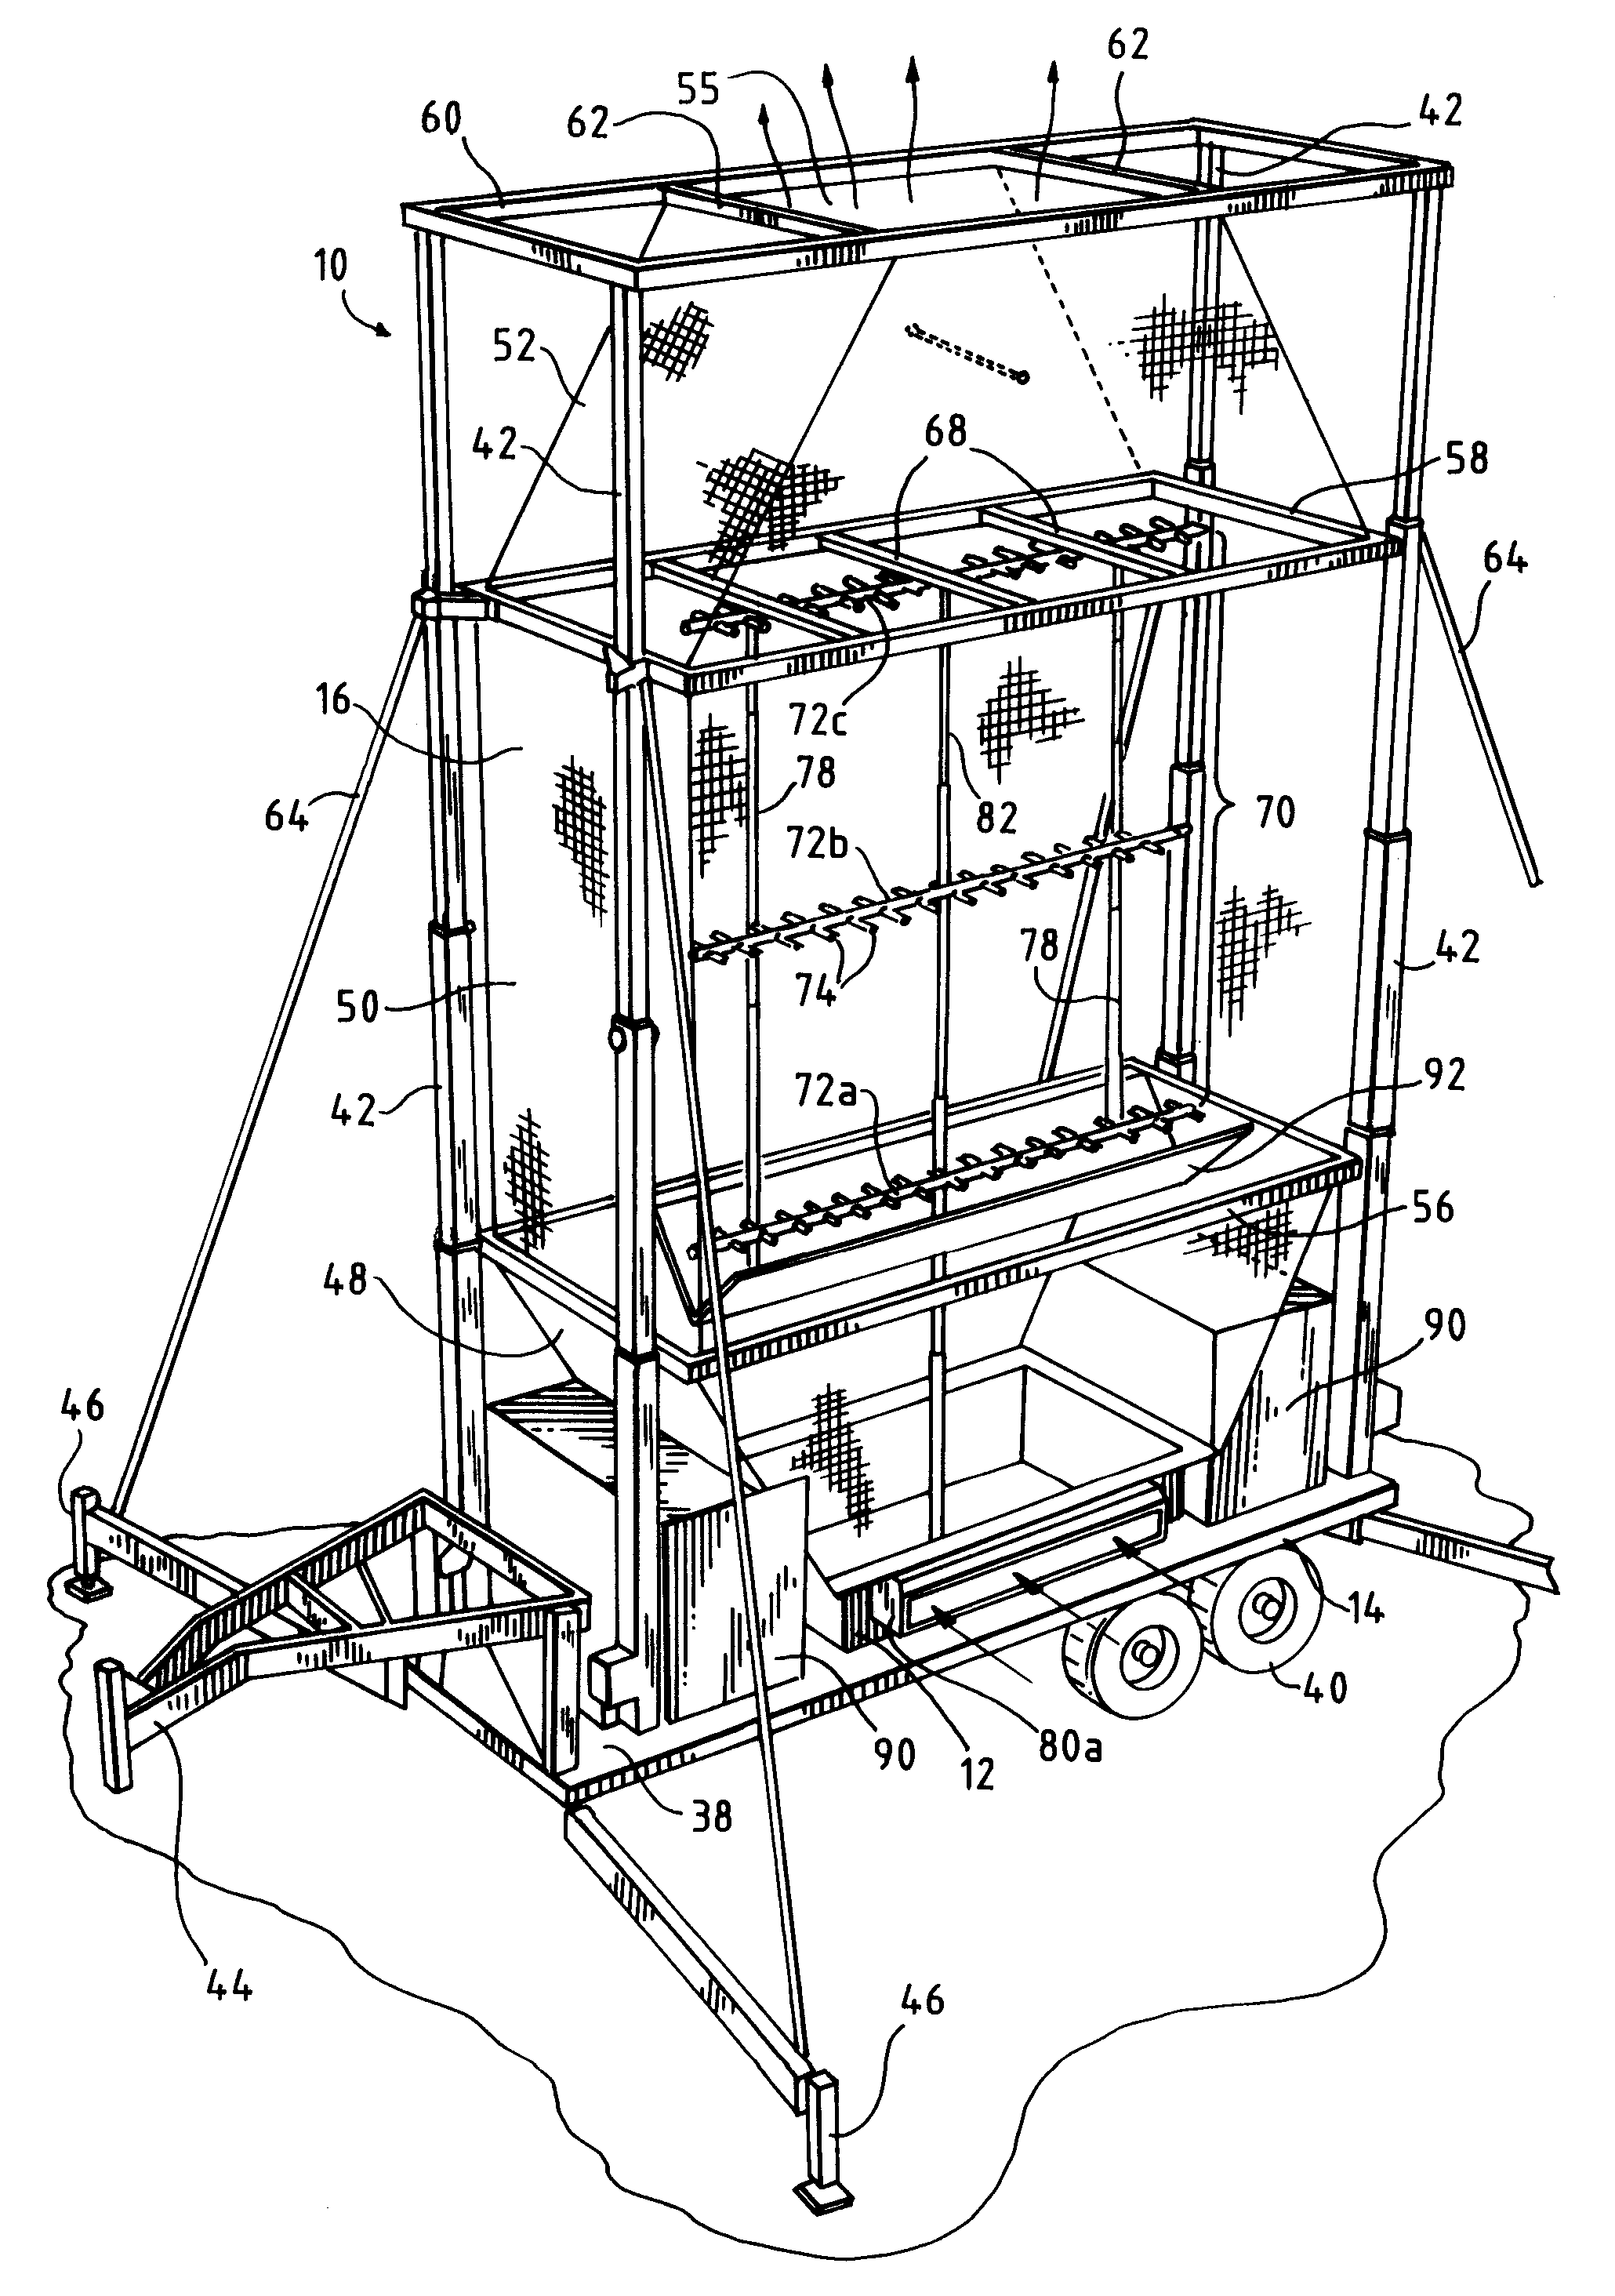 Portable evaporation chamber